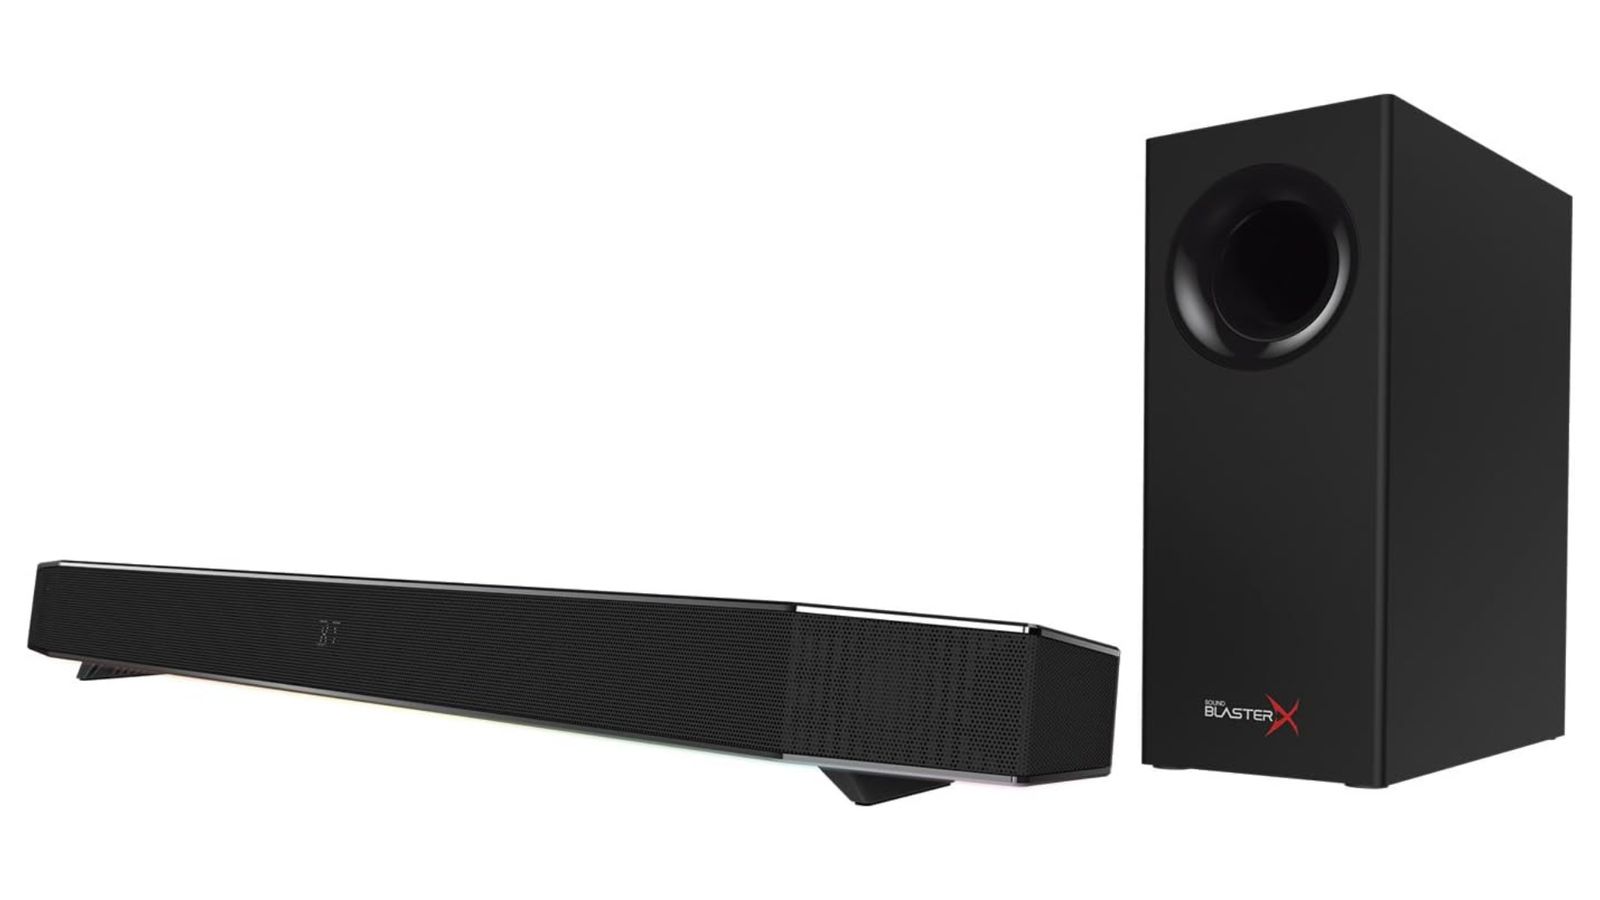 Sound BlasterX Katana product image of a long black soundbar next to a subwoofer.